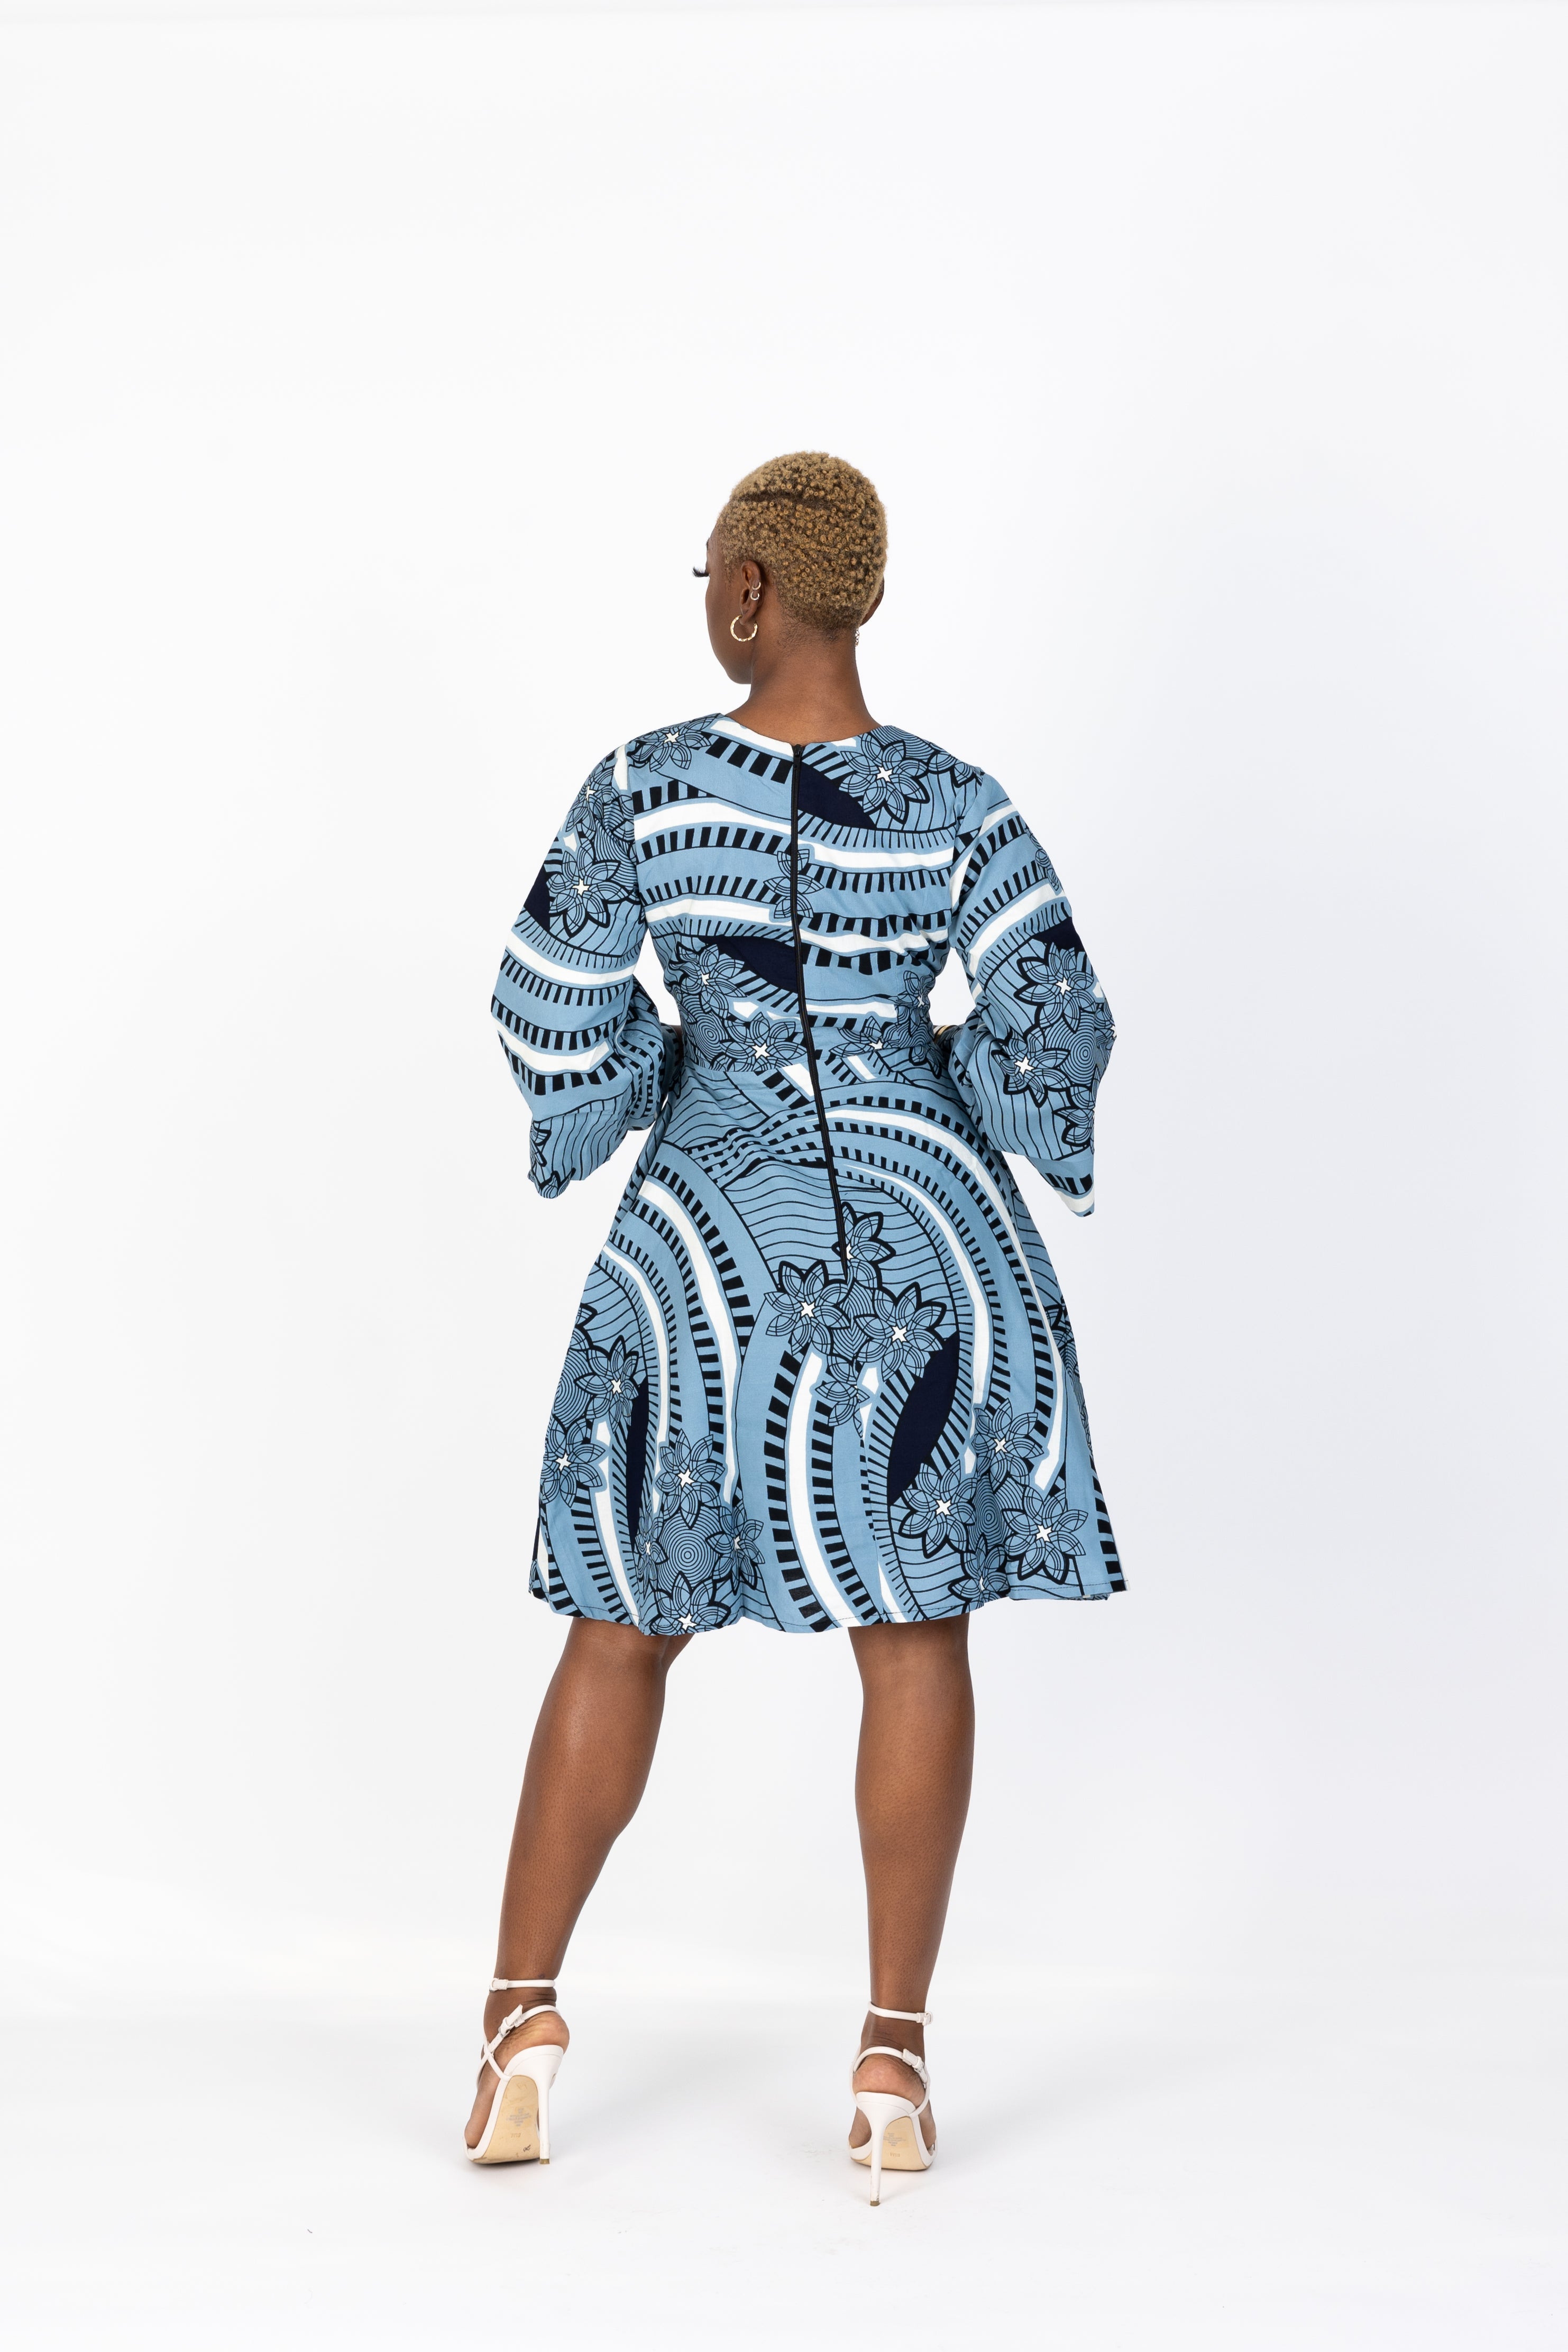 Yomi African Print Dress